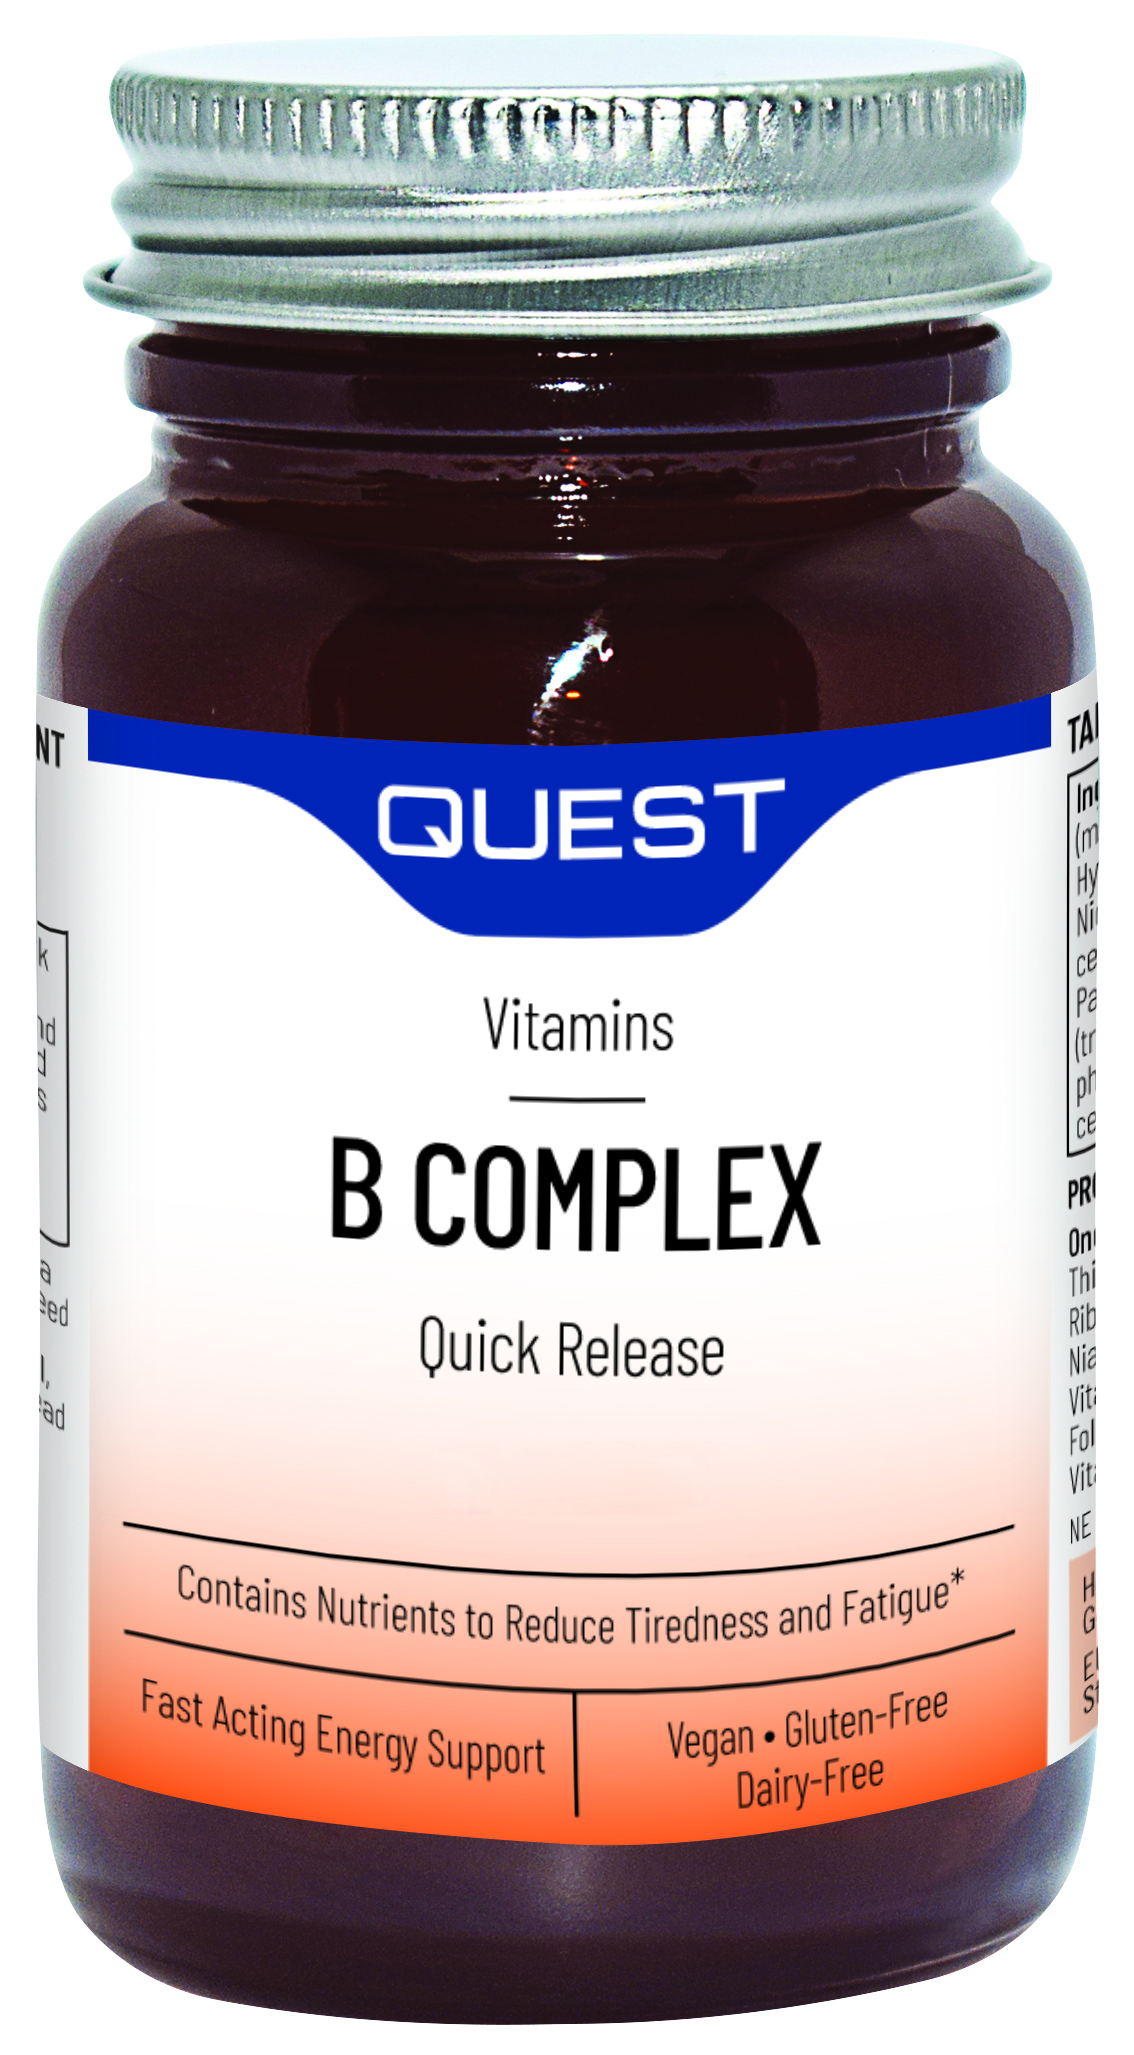 B Complex Quick Release